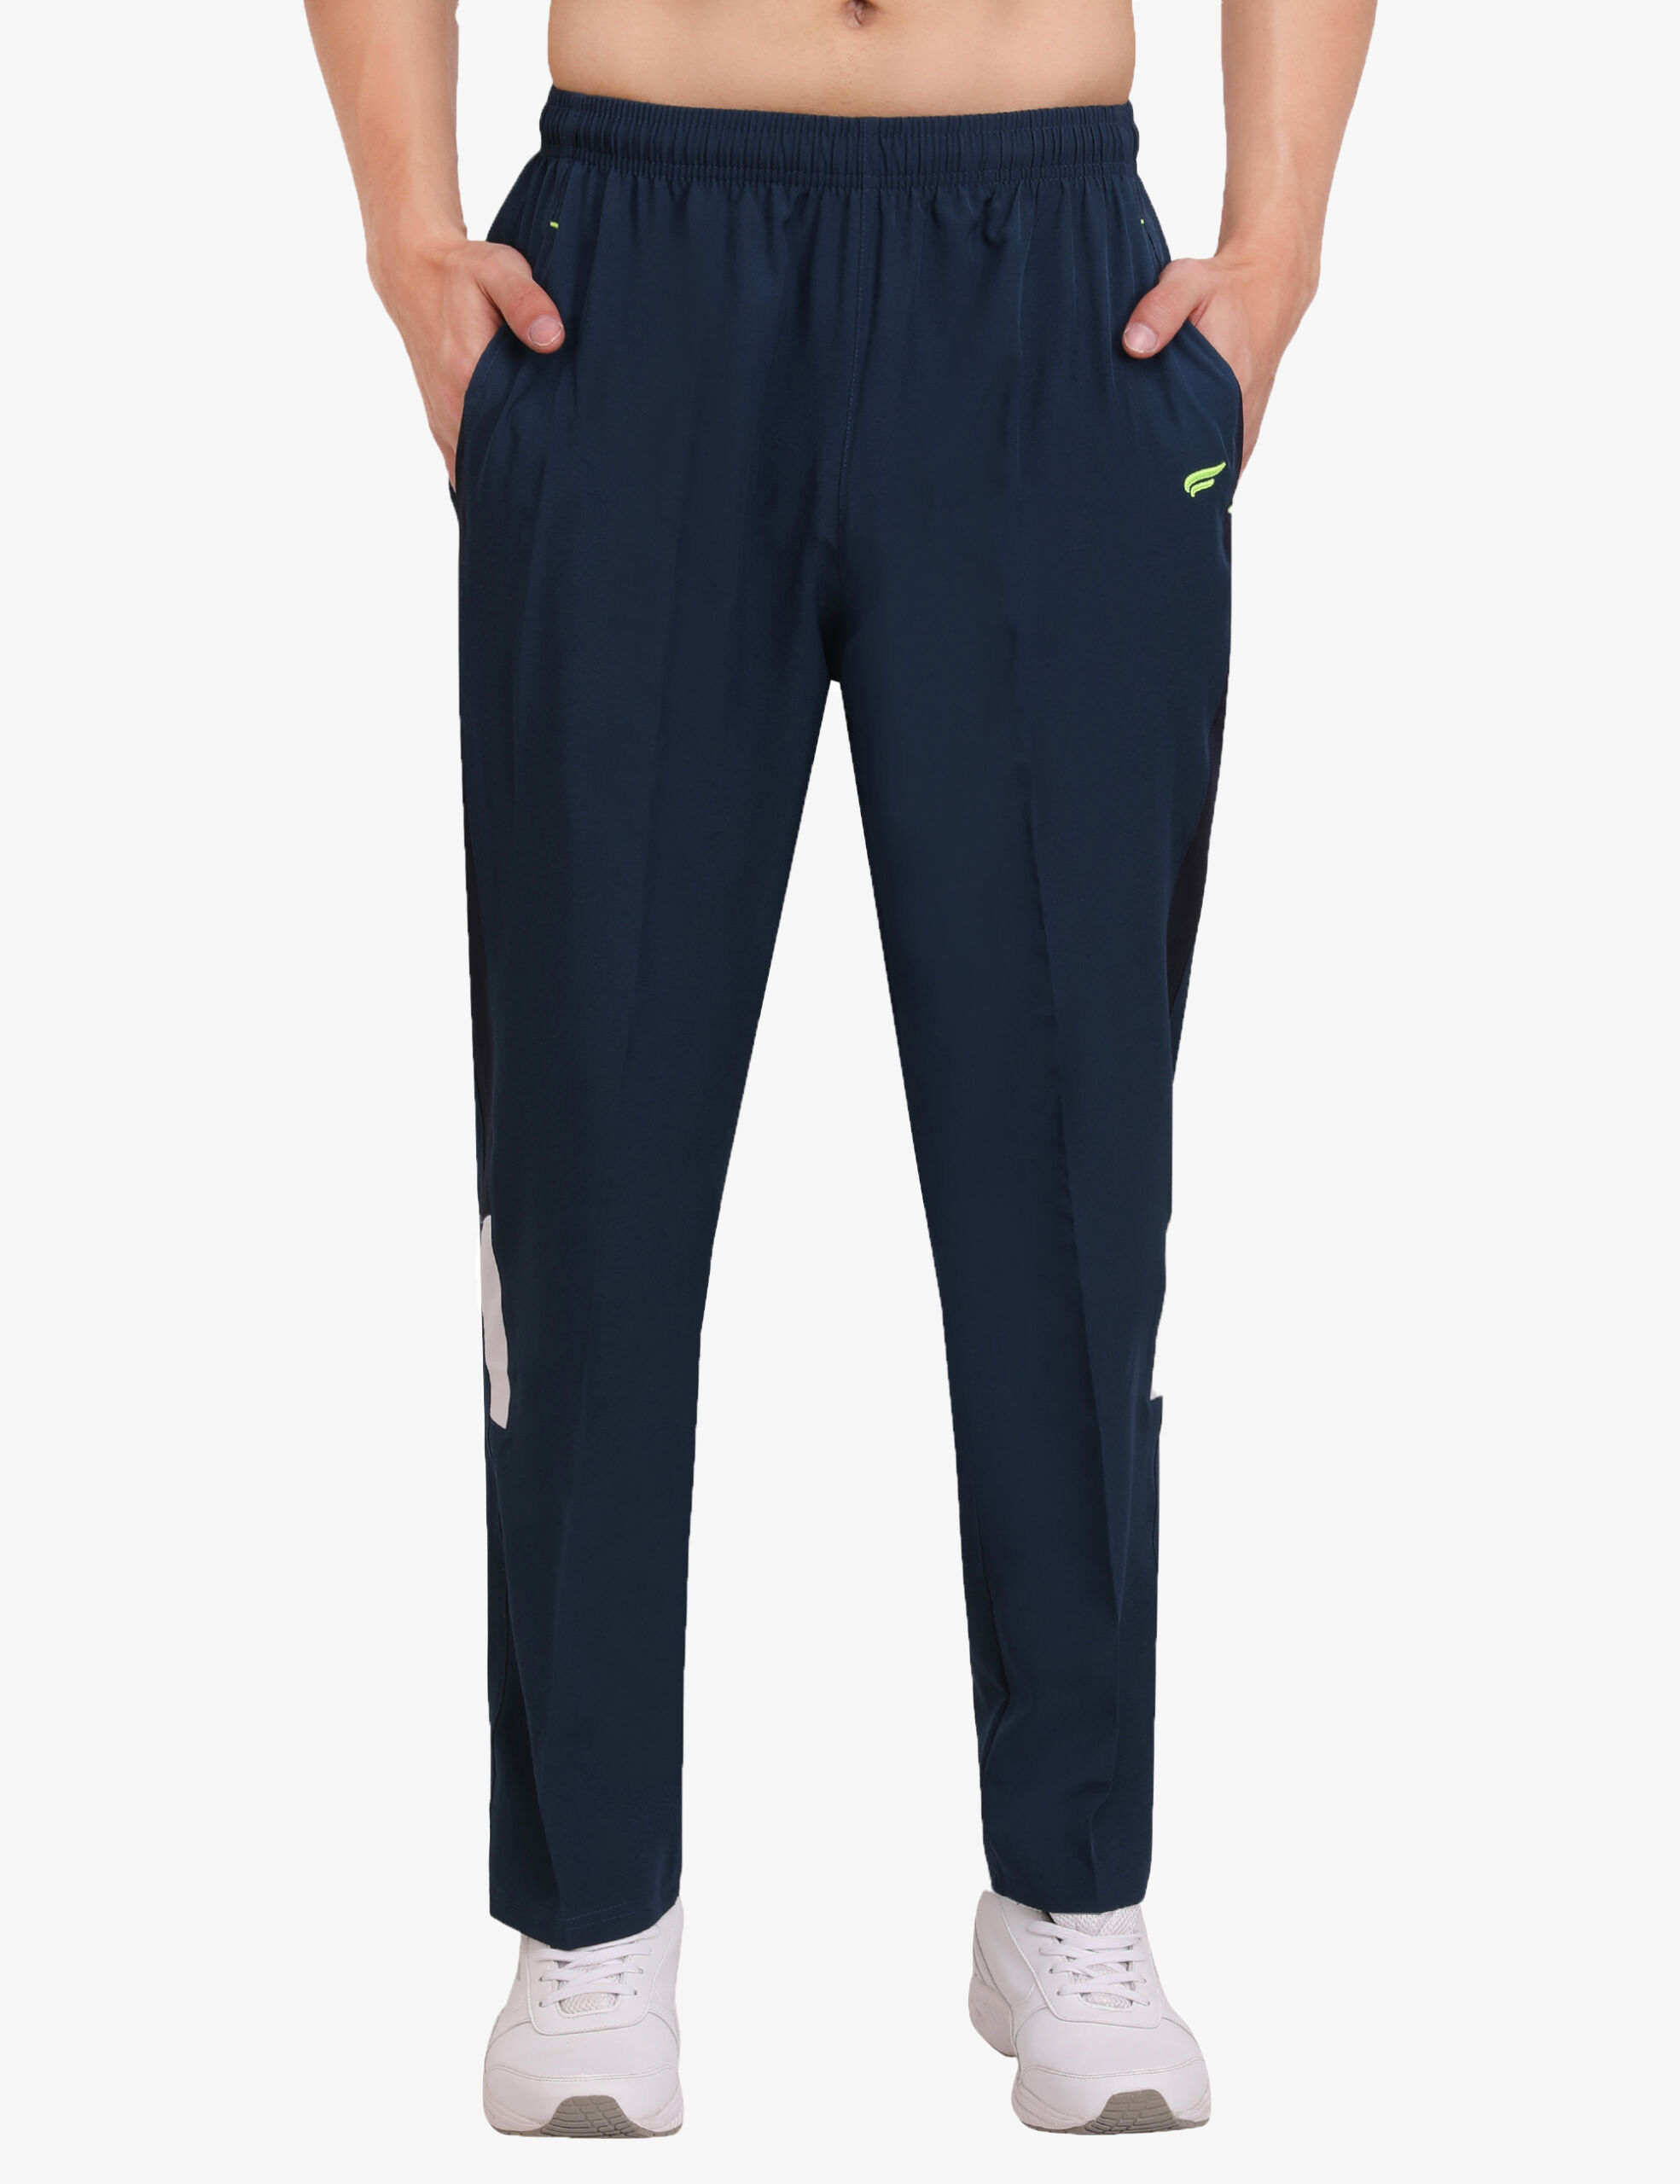 Regular Fit Trackpants For men Dark grey Zip Pockets Stretchable Gym Wear  Yoga Pants Fully (NS)